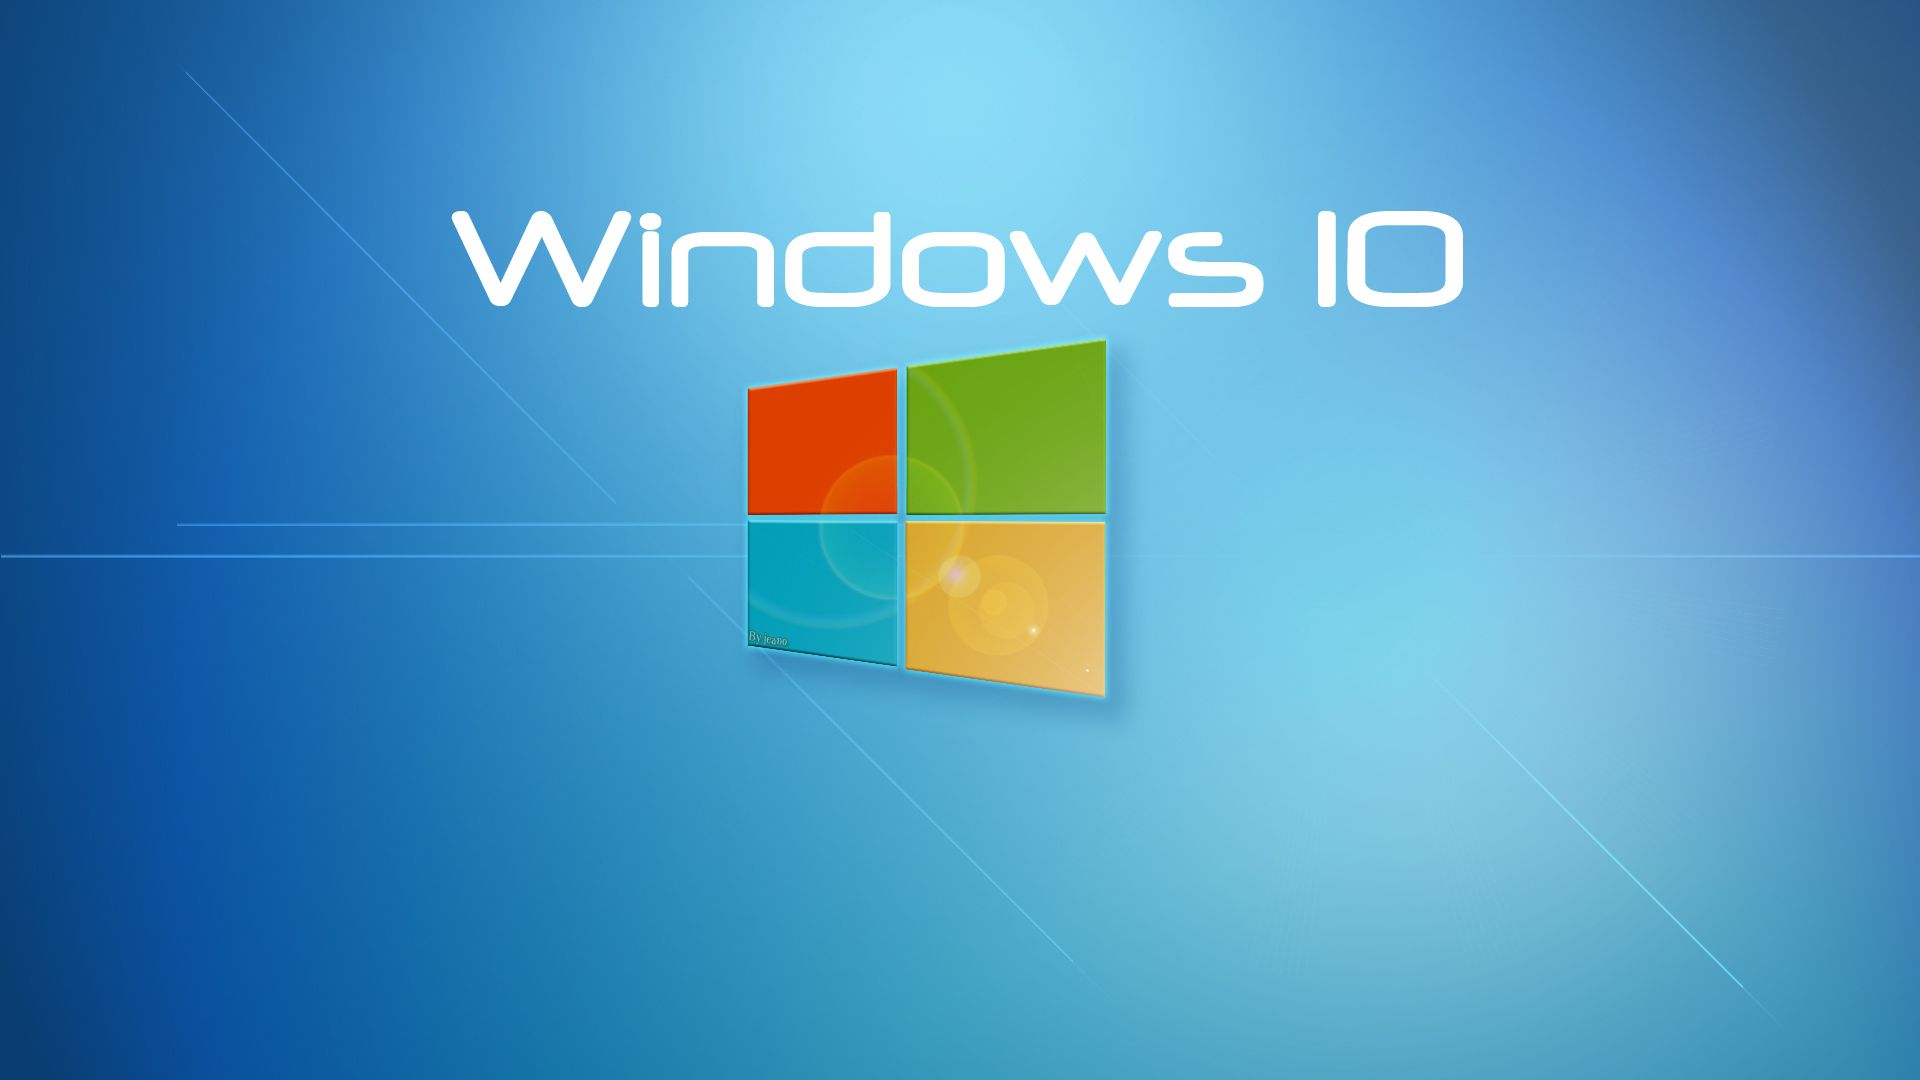 Windows 10 Hd picture wallpaper